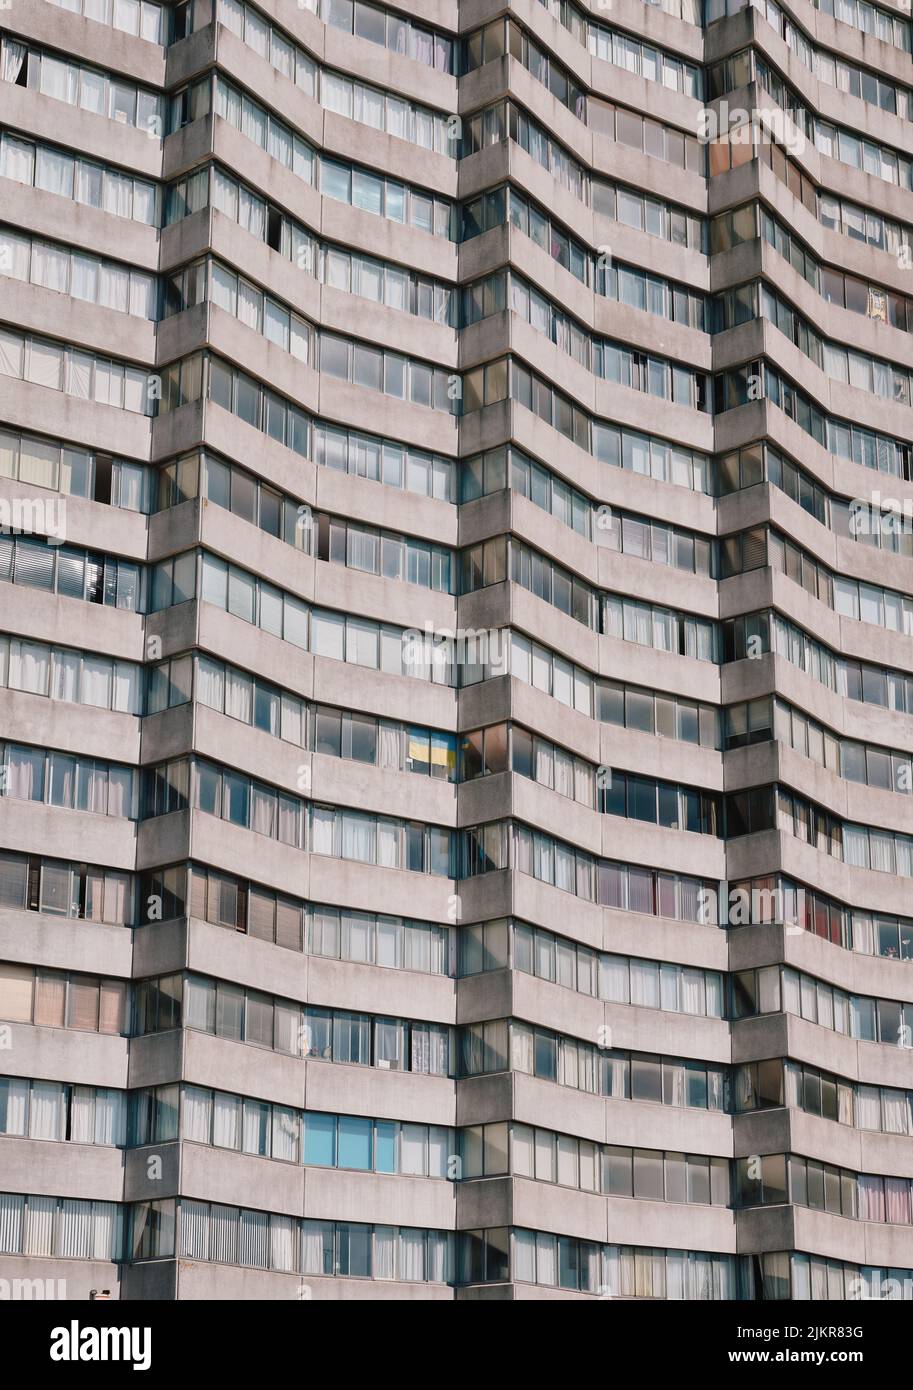 Arlington House torre detalle bloque - 58 metros de altura 18 pisos bloque de apartamentos residenciales, Margate Kent, Inglaterra Reino Unido. Arquitectura brutalista construida en 1964 Foto de stock